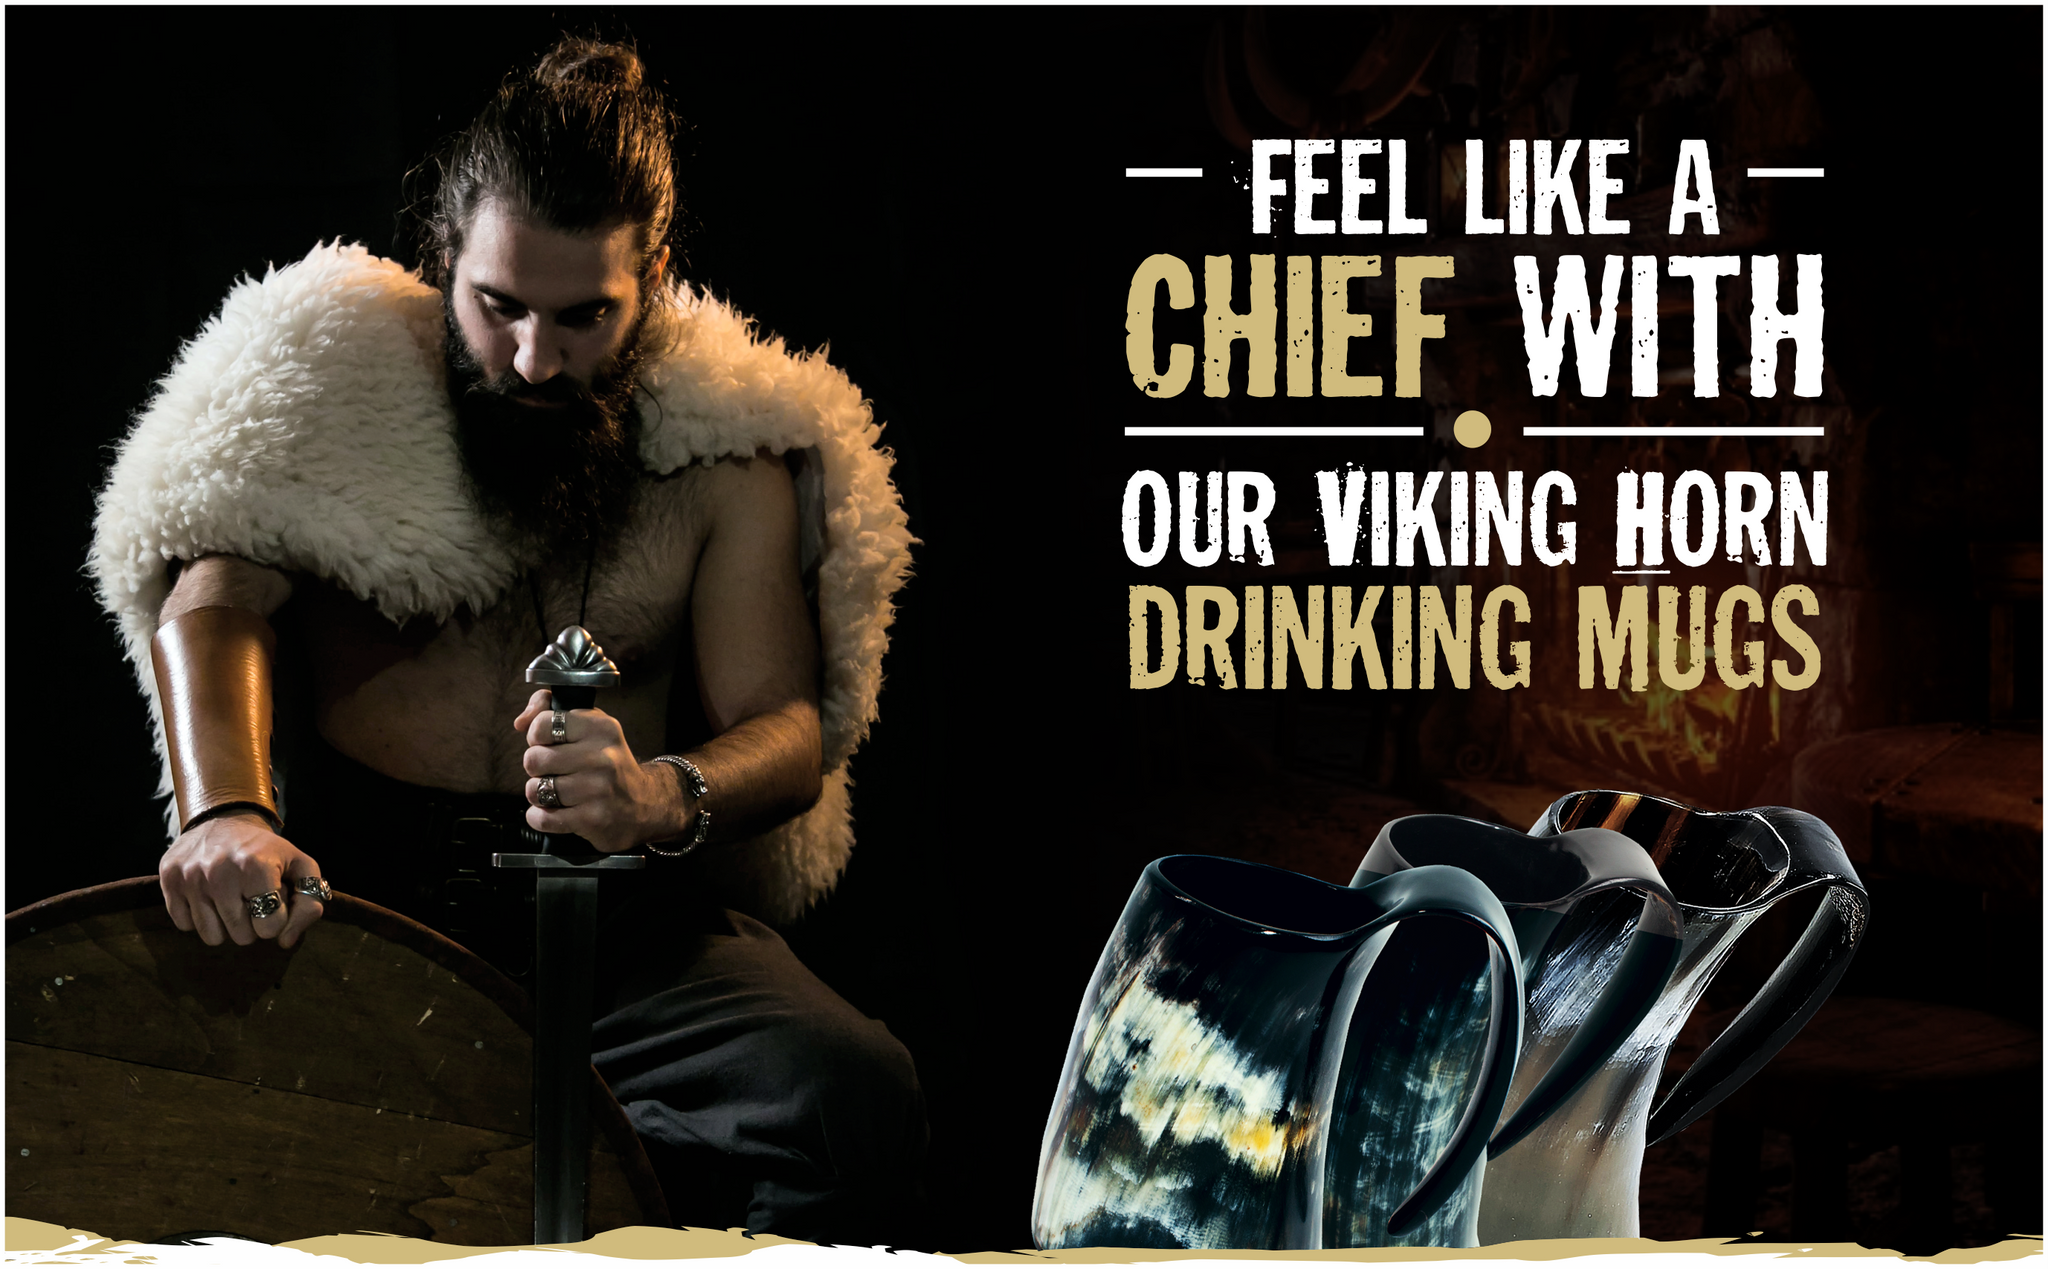 Horn Mug Culture, Viking Culture!